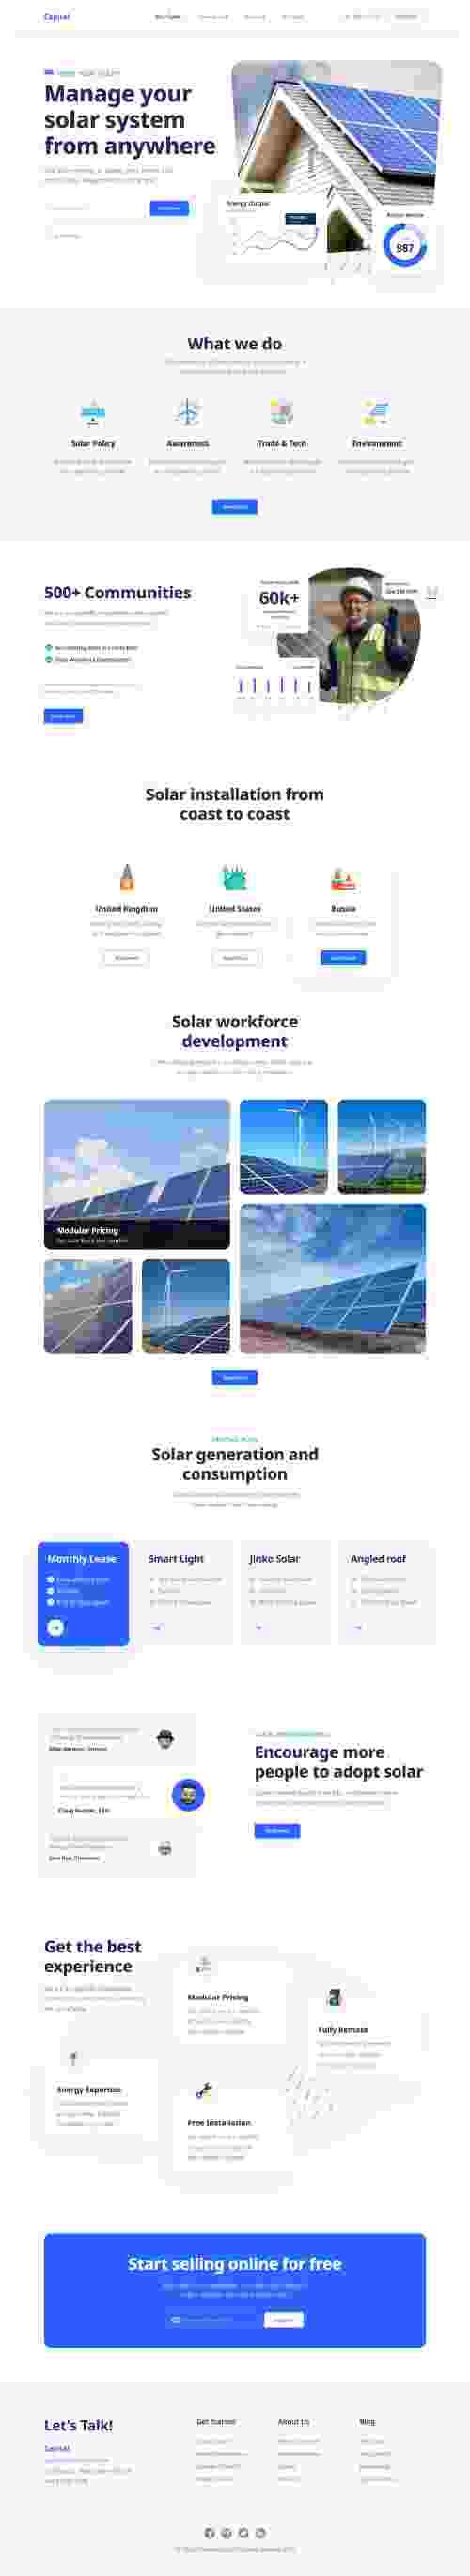 UIHut - Capital Solar Energy Website - 12106